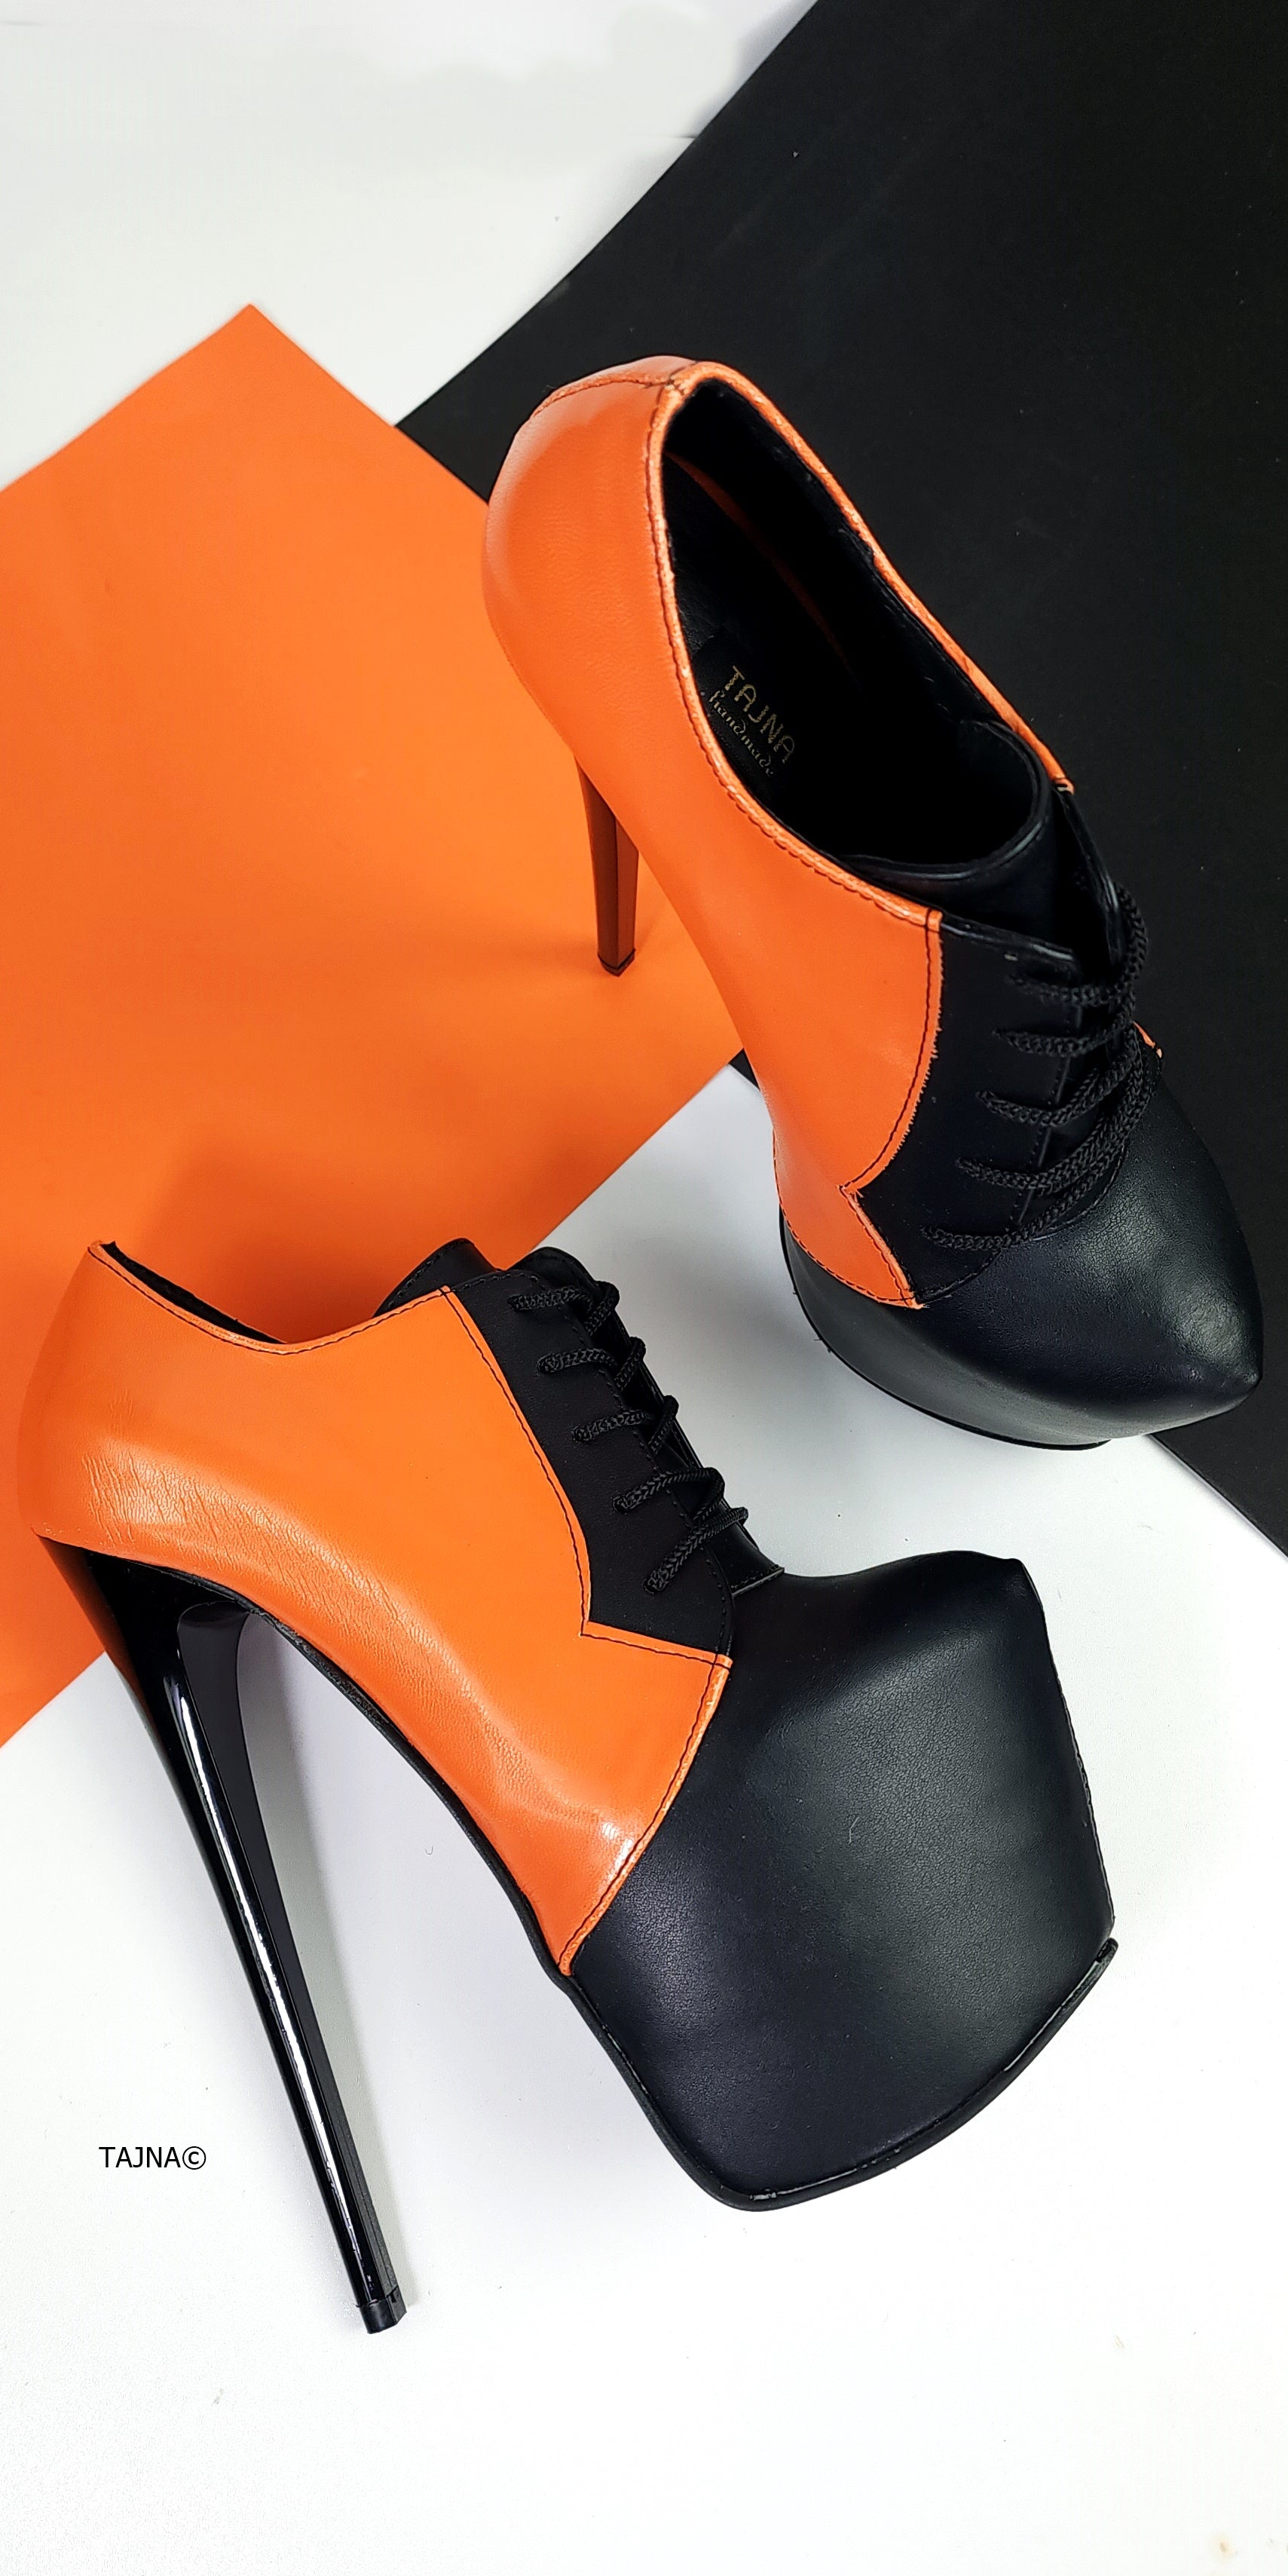 Orange high heels shoes stock photo. Image of jewelry - 149323528